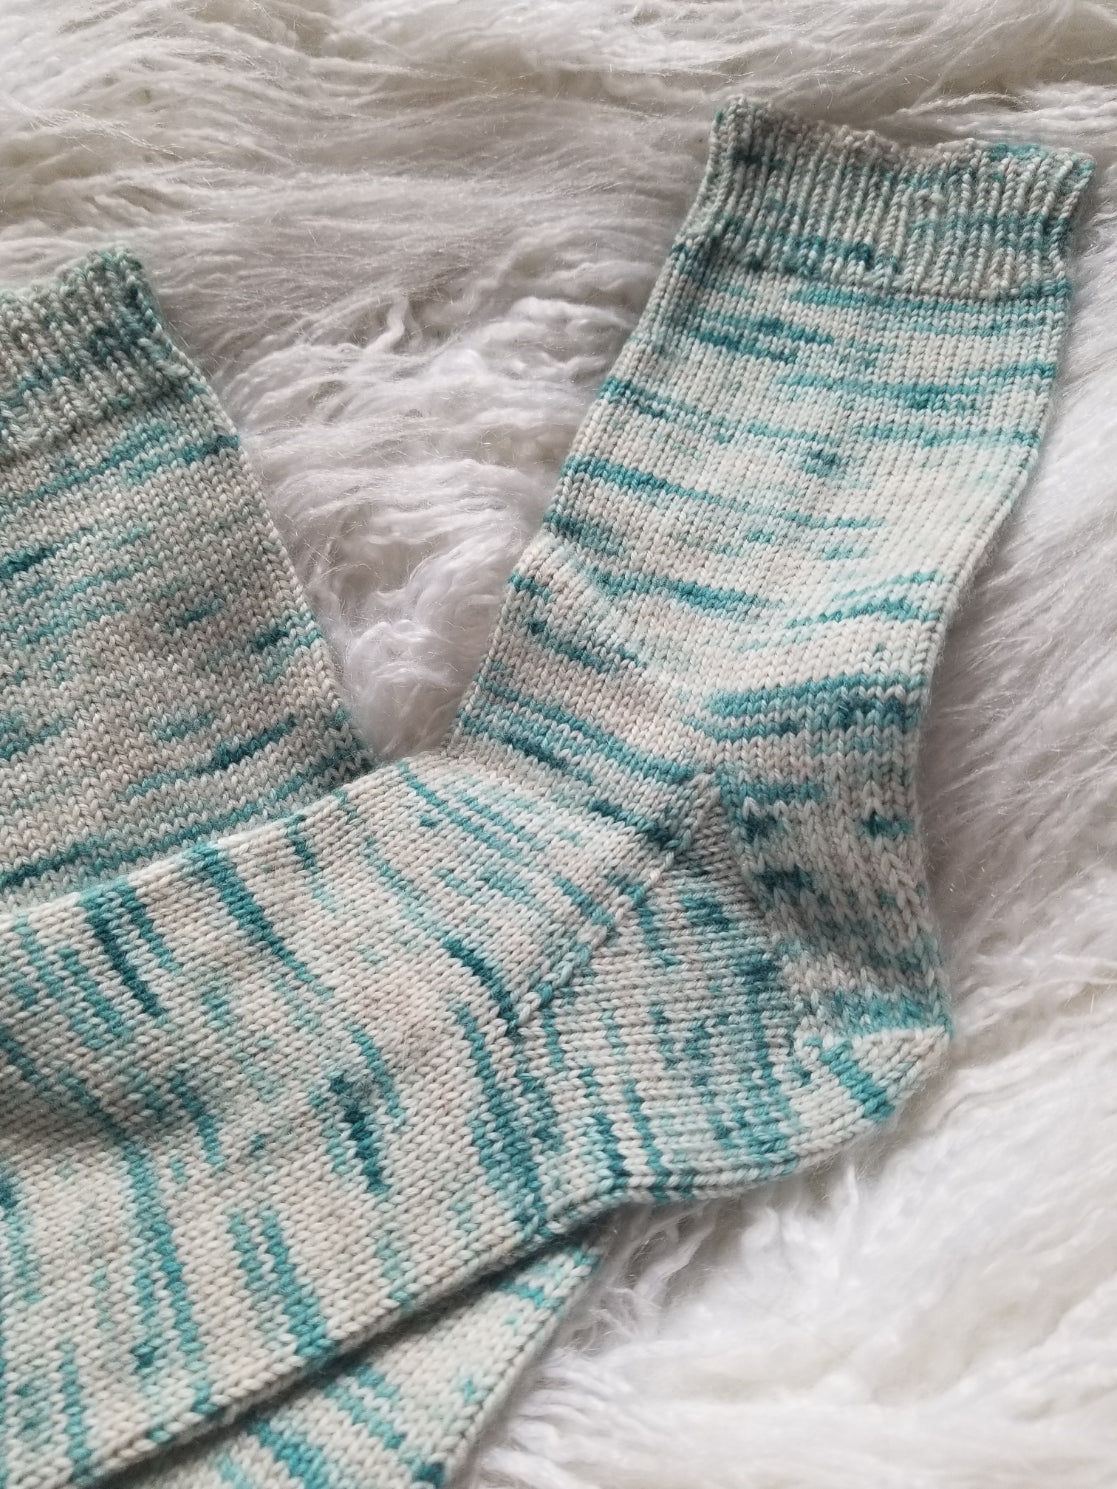 Super Simple Toe-Up Socks - Knitting Pattern